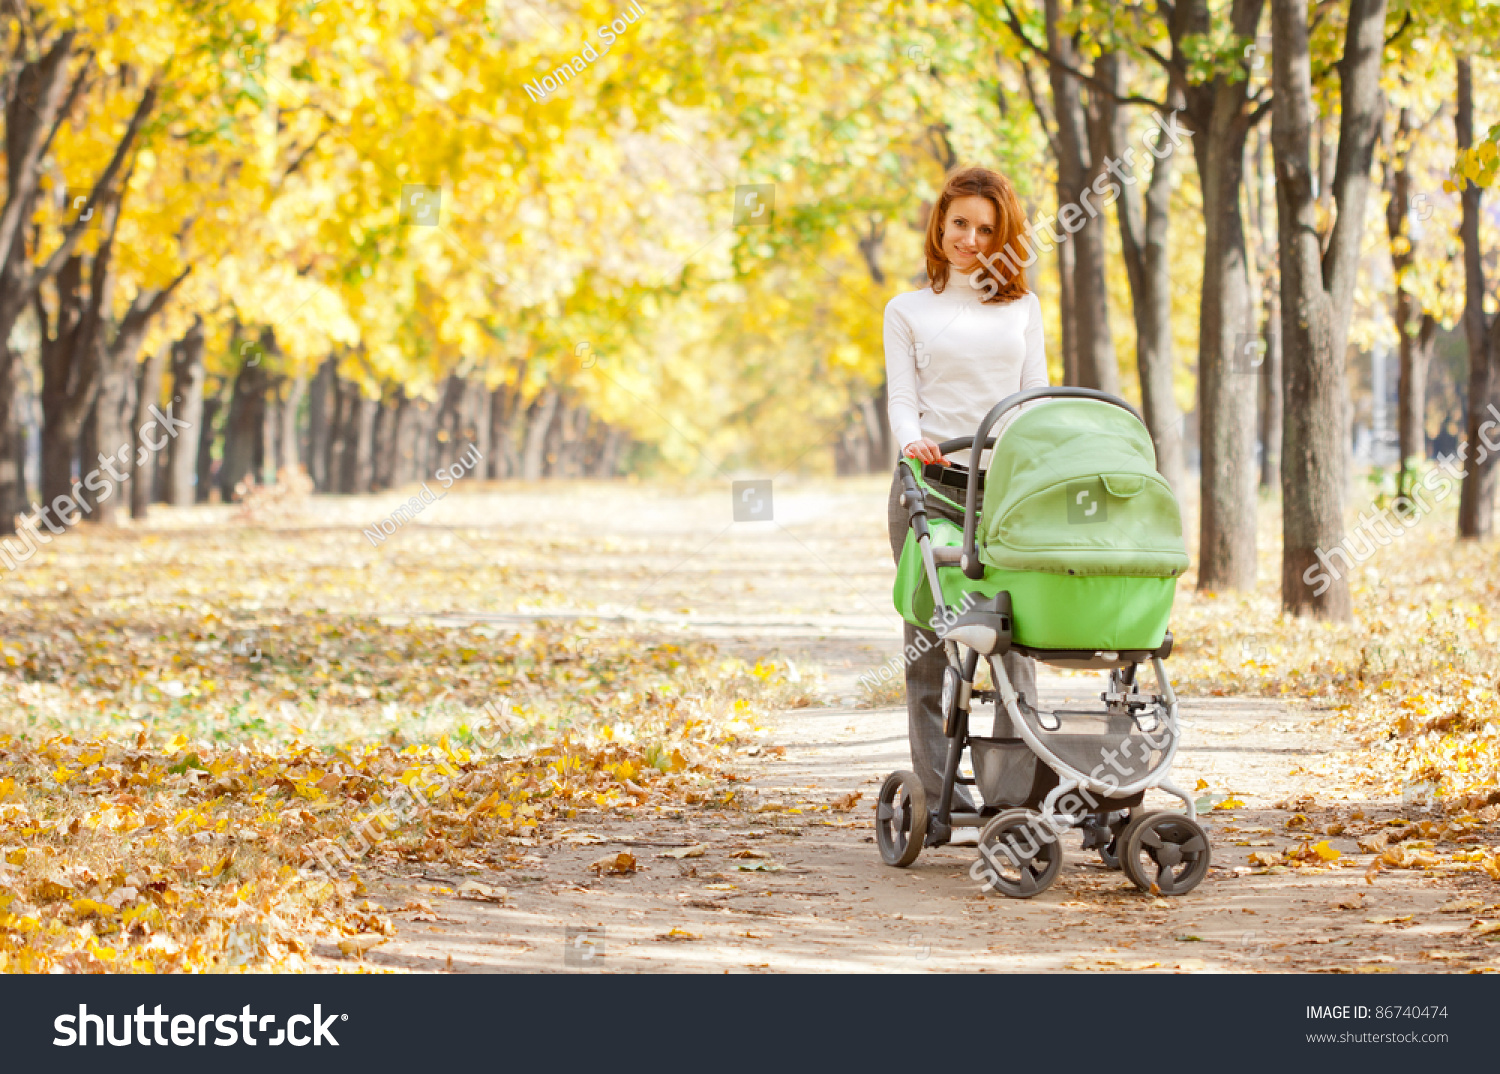 Мамаши с колясками. Коляска прогулка. Мама с коляской. Женщина с коляской. Мамы с колясками на прогулке.